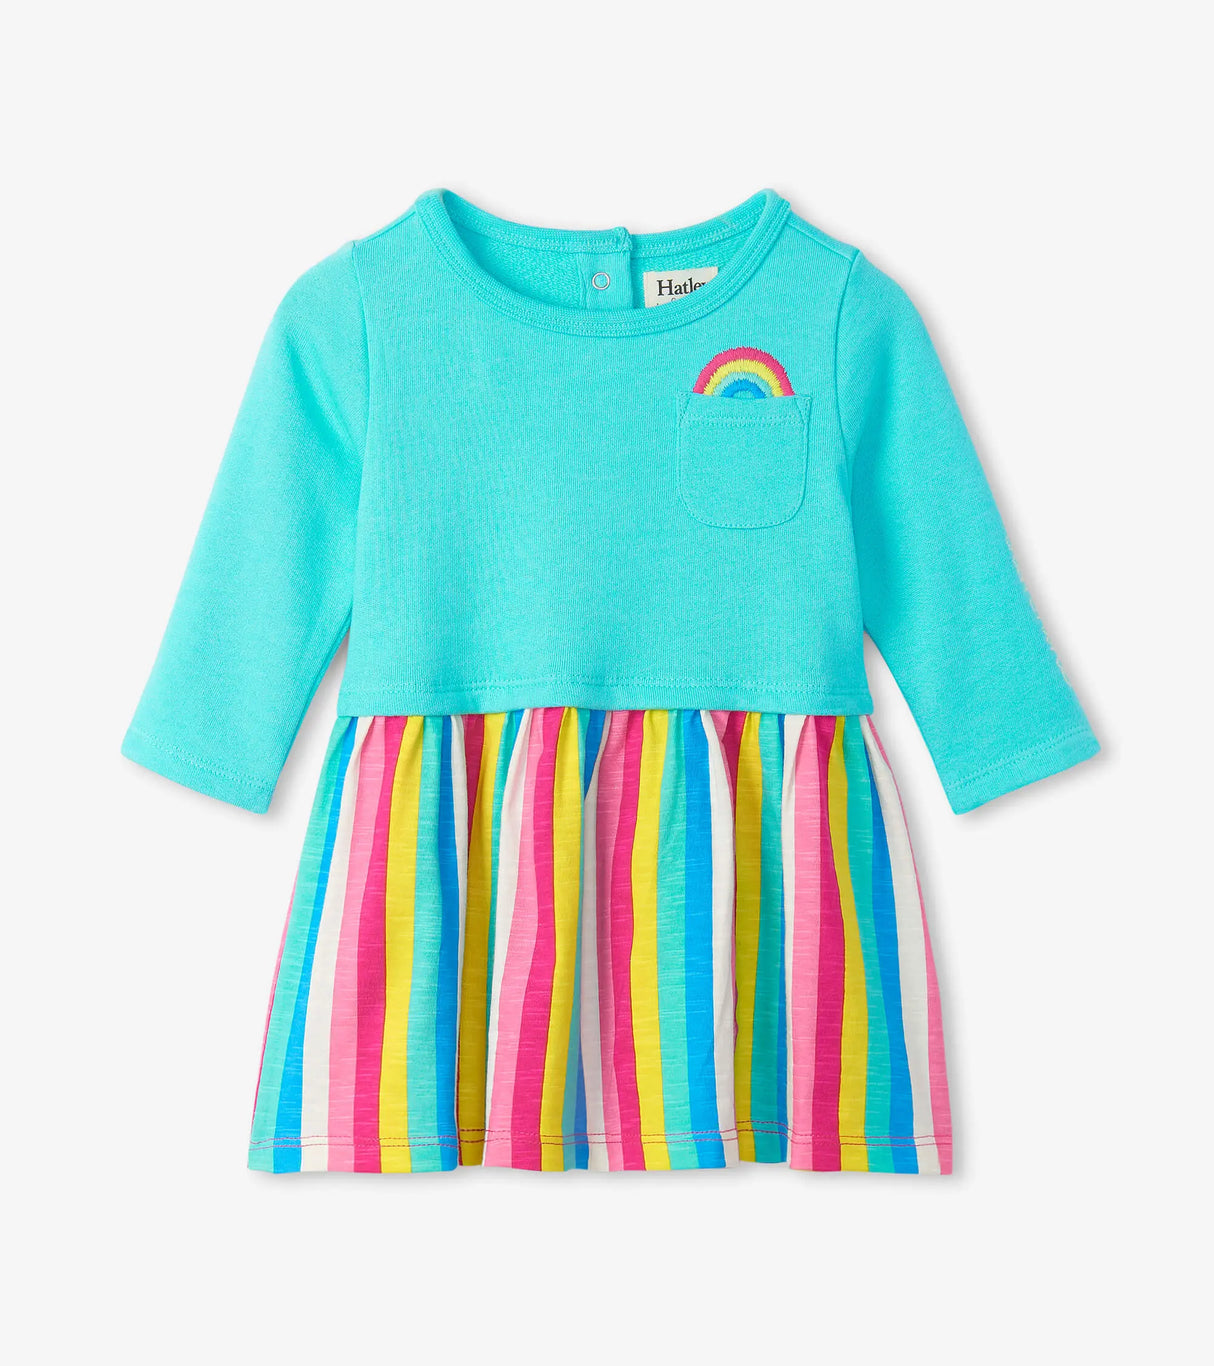 Radiant Rainbow Layered Knit Baby Dress | Hatley - Hatley